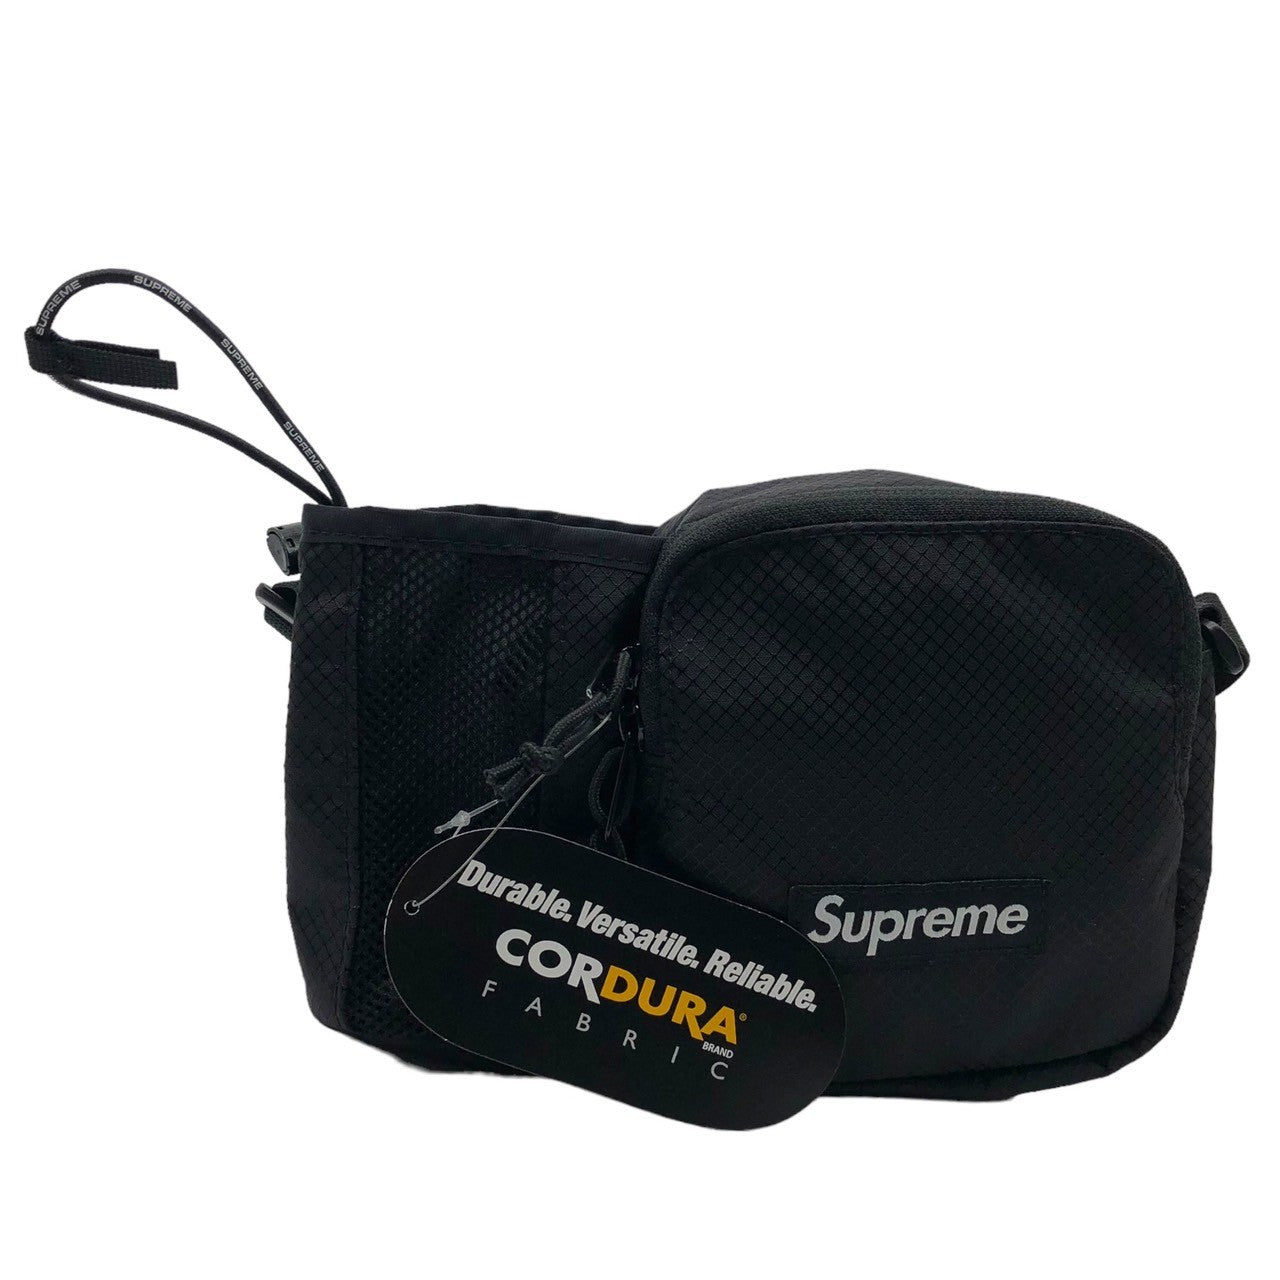 SUPREME(シュプリーム) 22SS Side Bag CORDURA ナイロン サイドバッグ ショルダーバッグ ドリンクホルダー ブラック